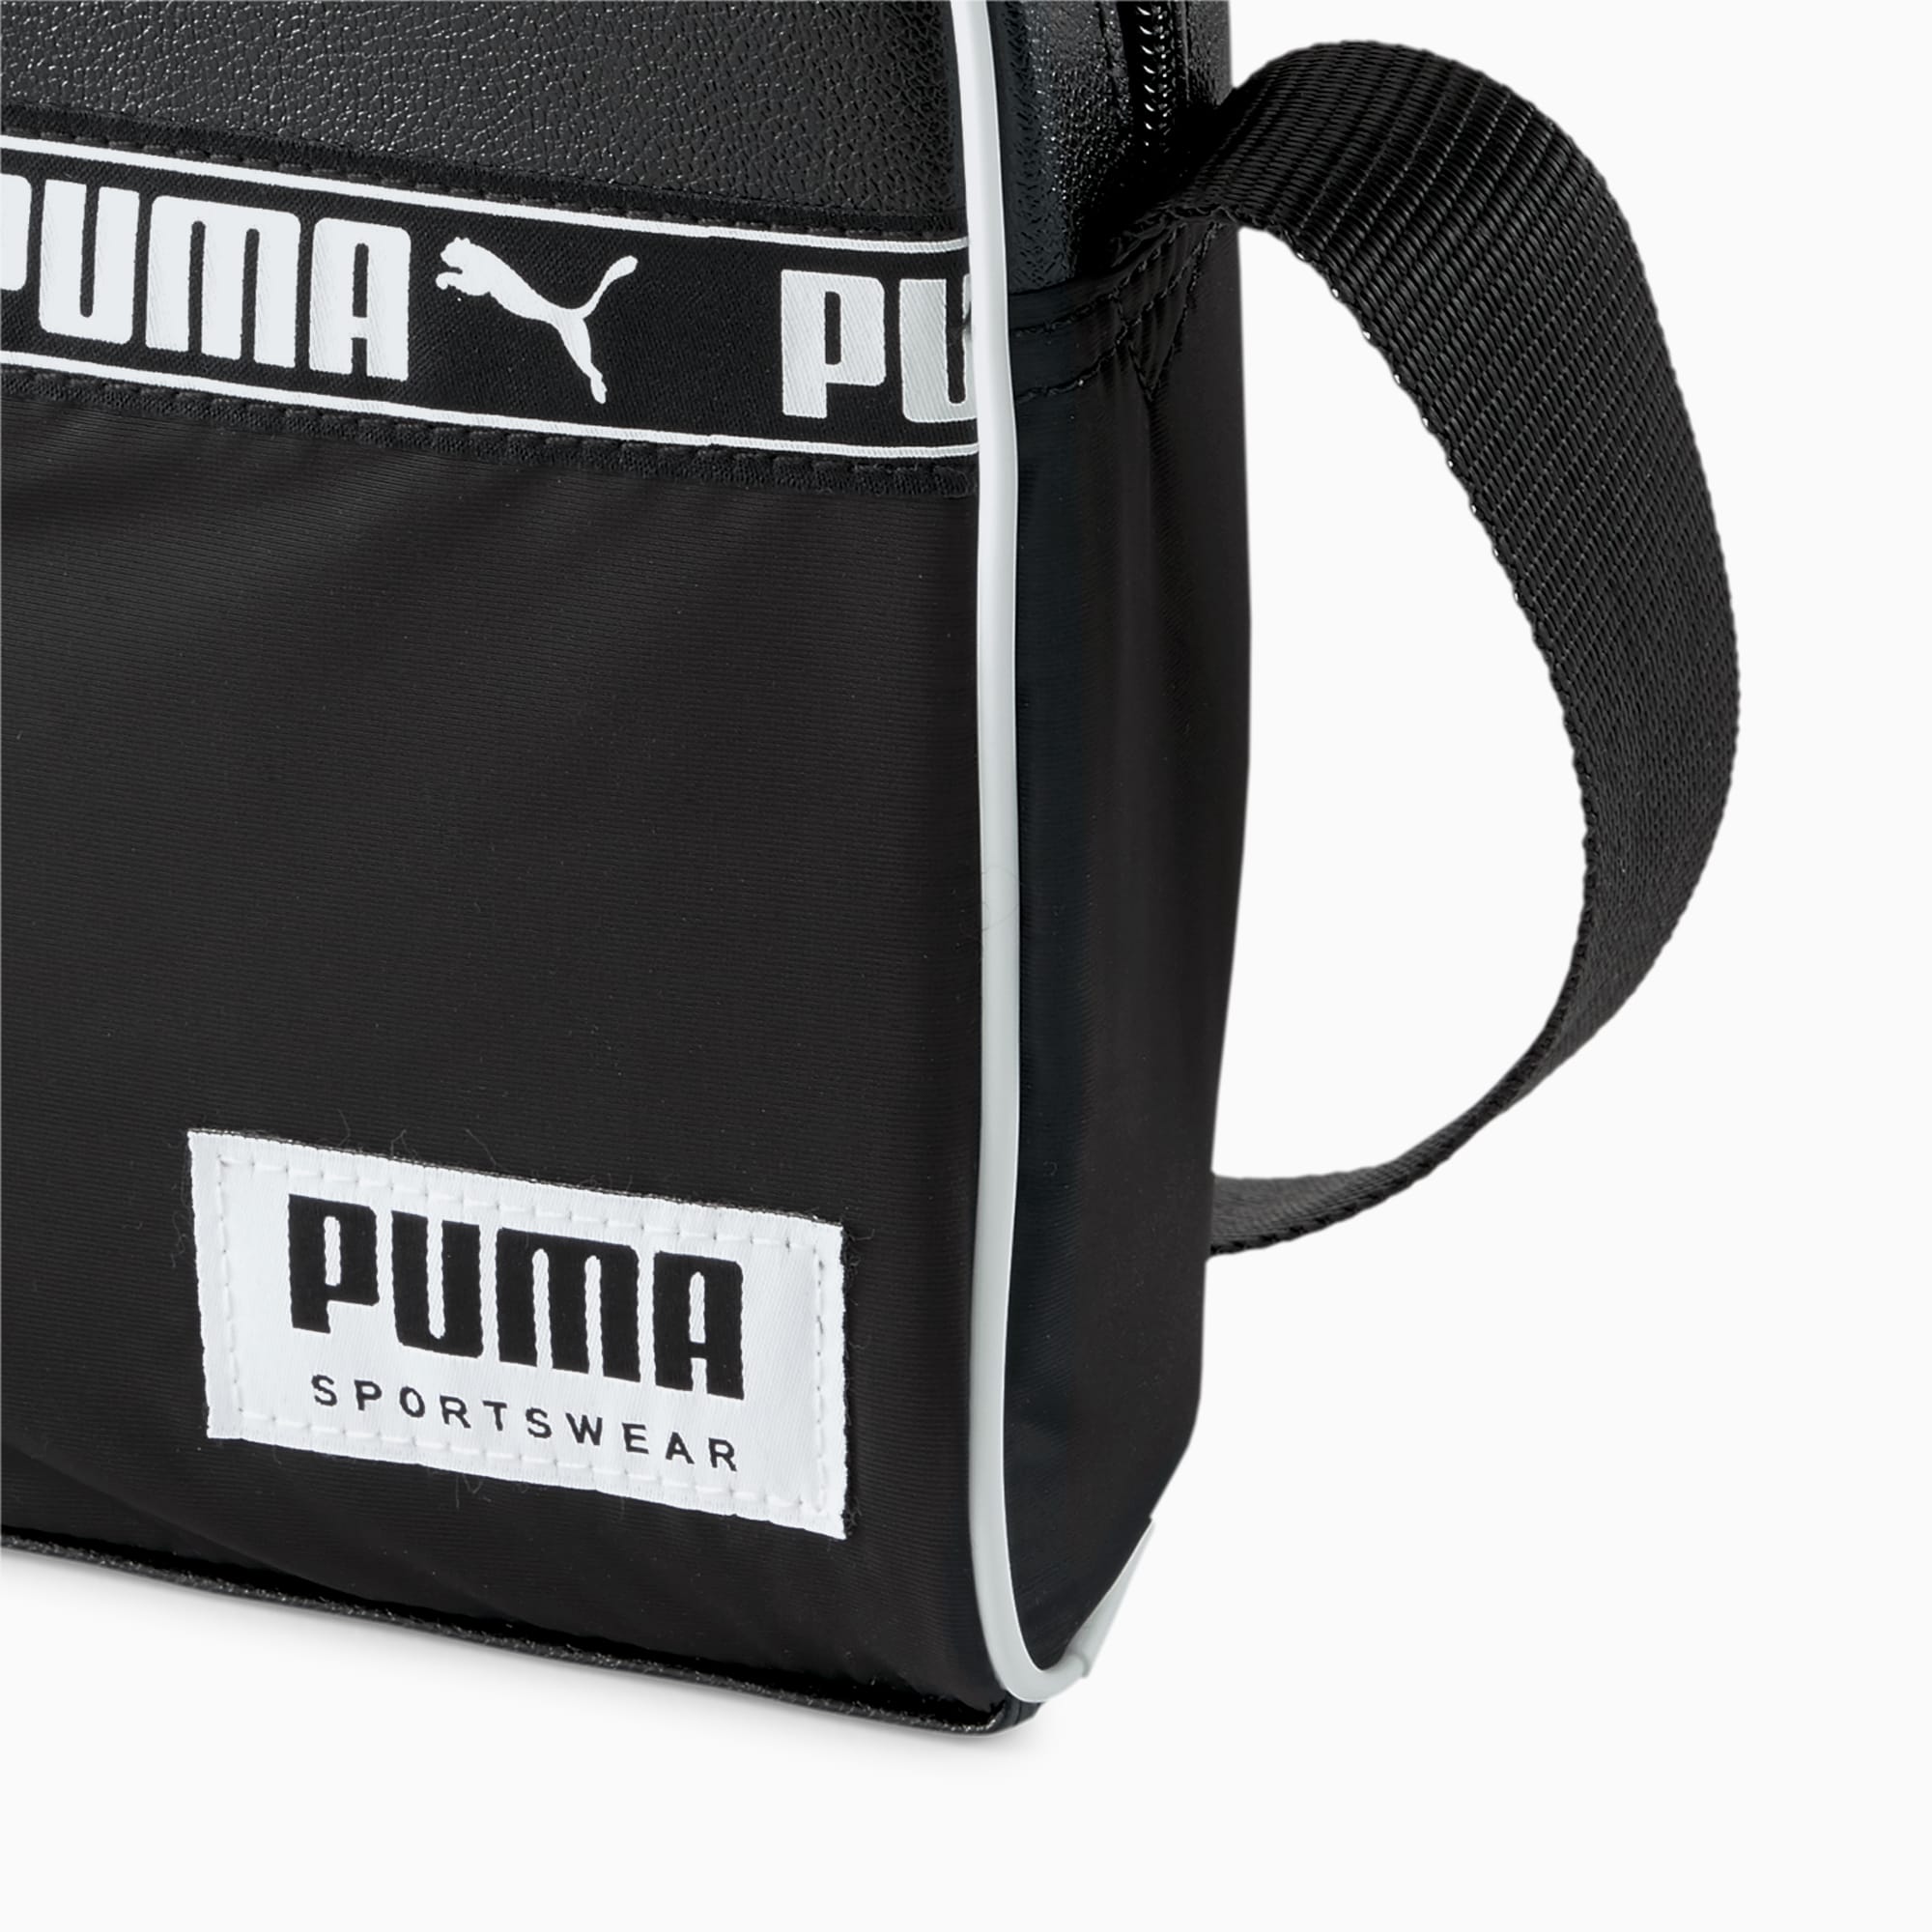 Sacoche Puma Campus Portable Retro 7664101 Black